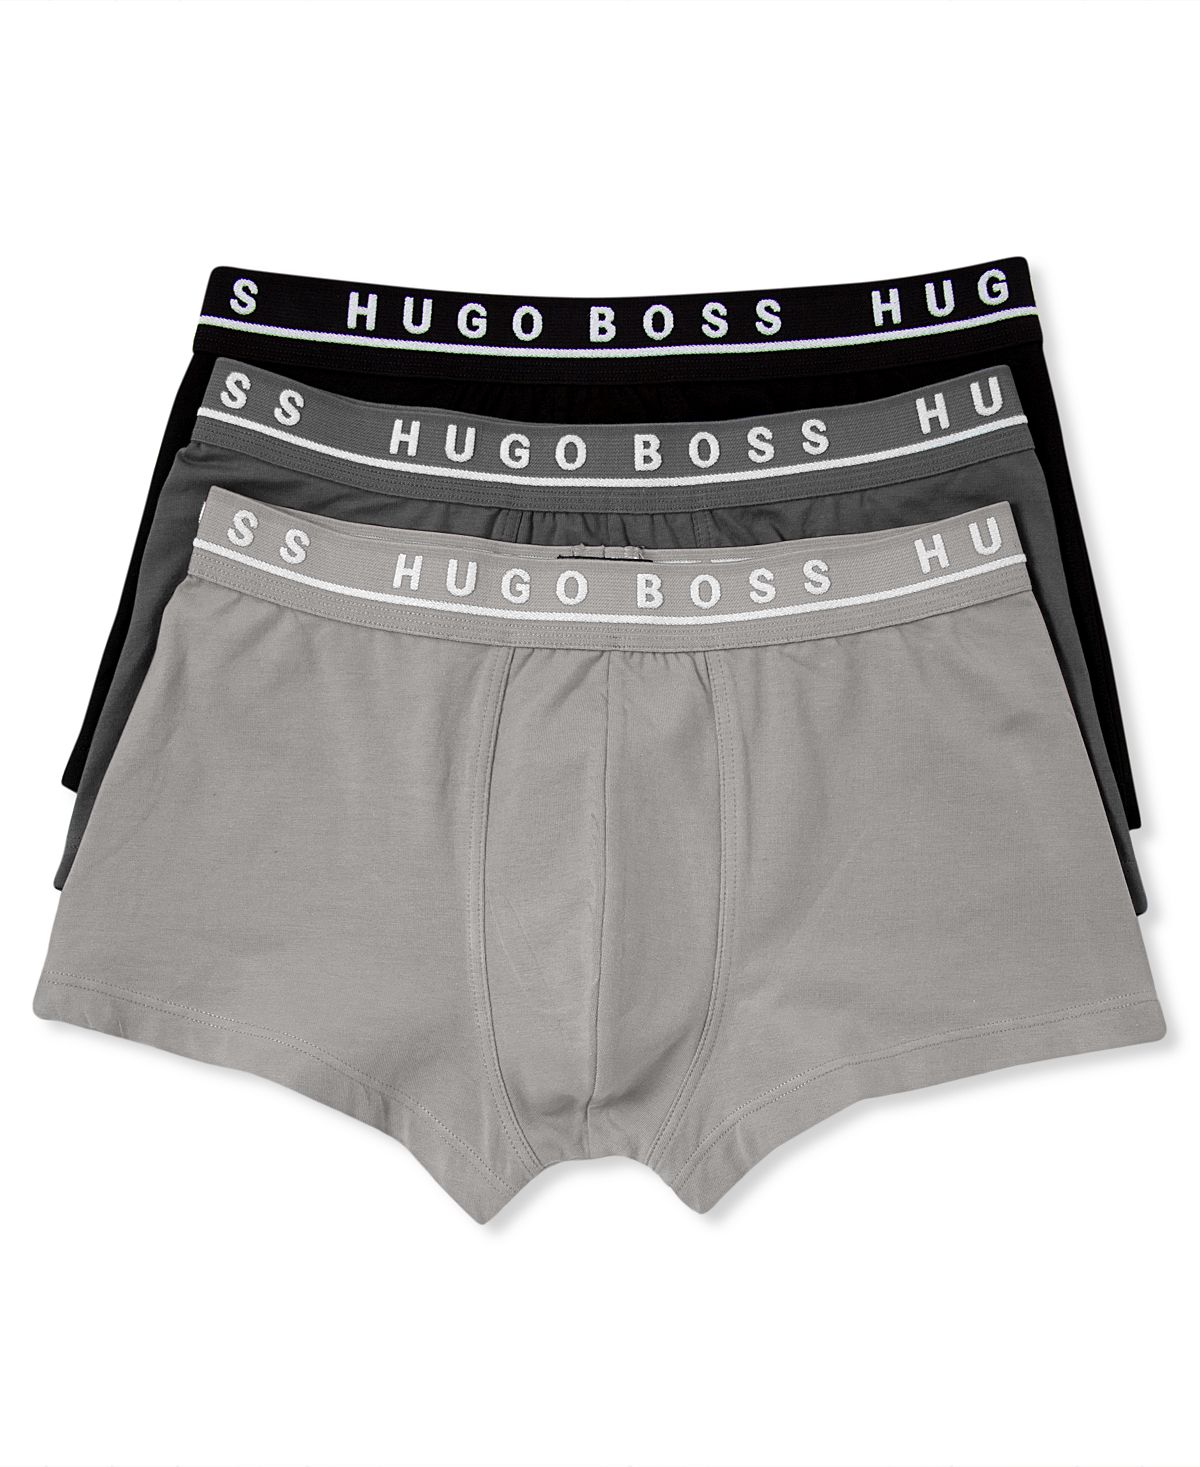 Boss Underwear Cotton Stretch 3 Pack Trunks Grey/Charcoal/Black